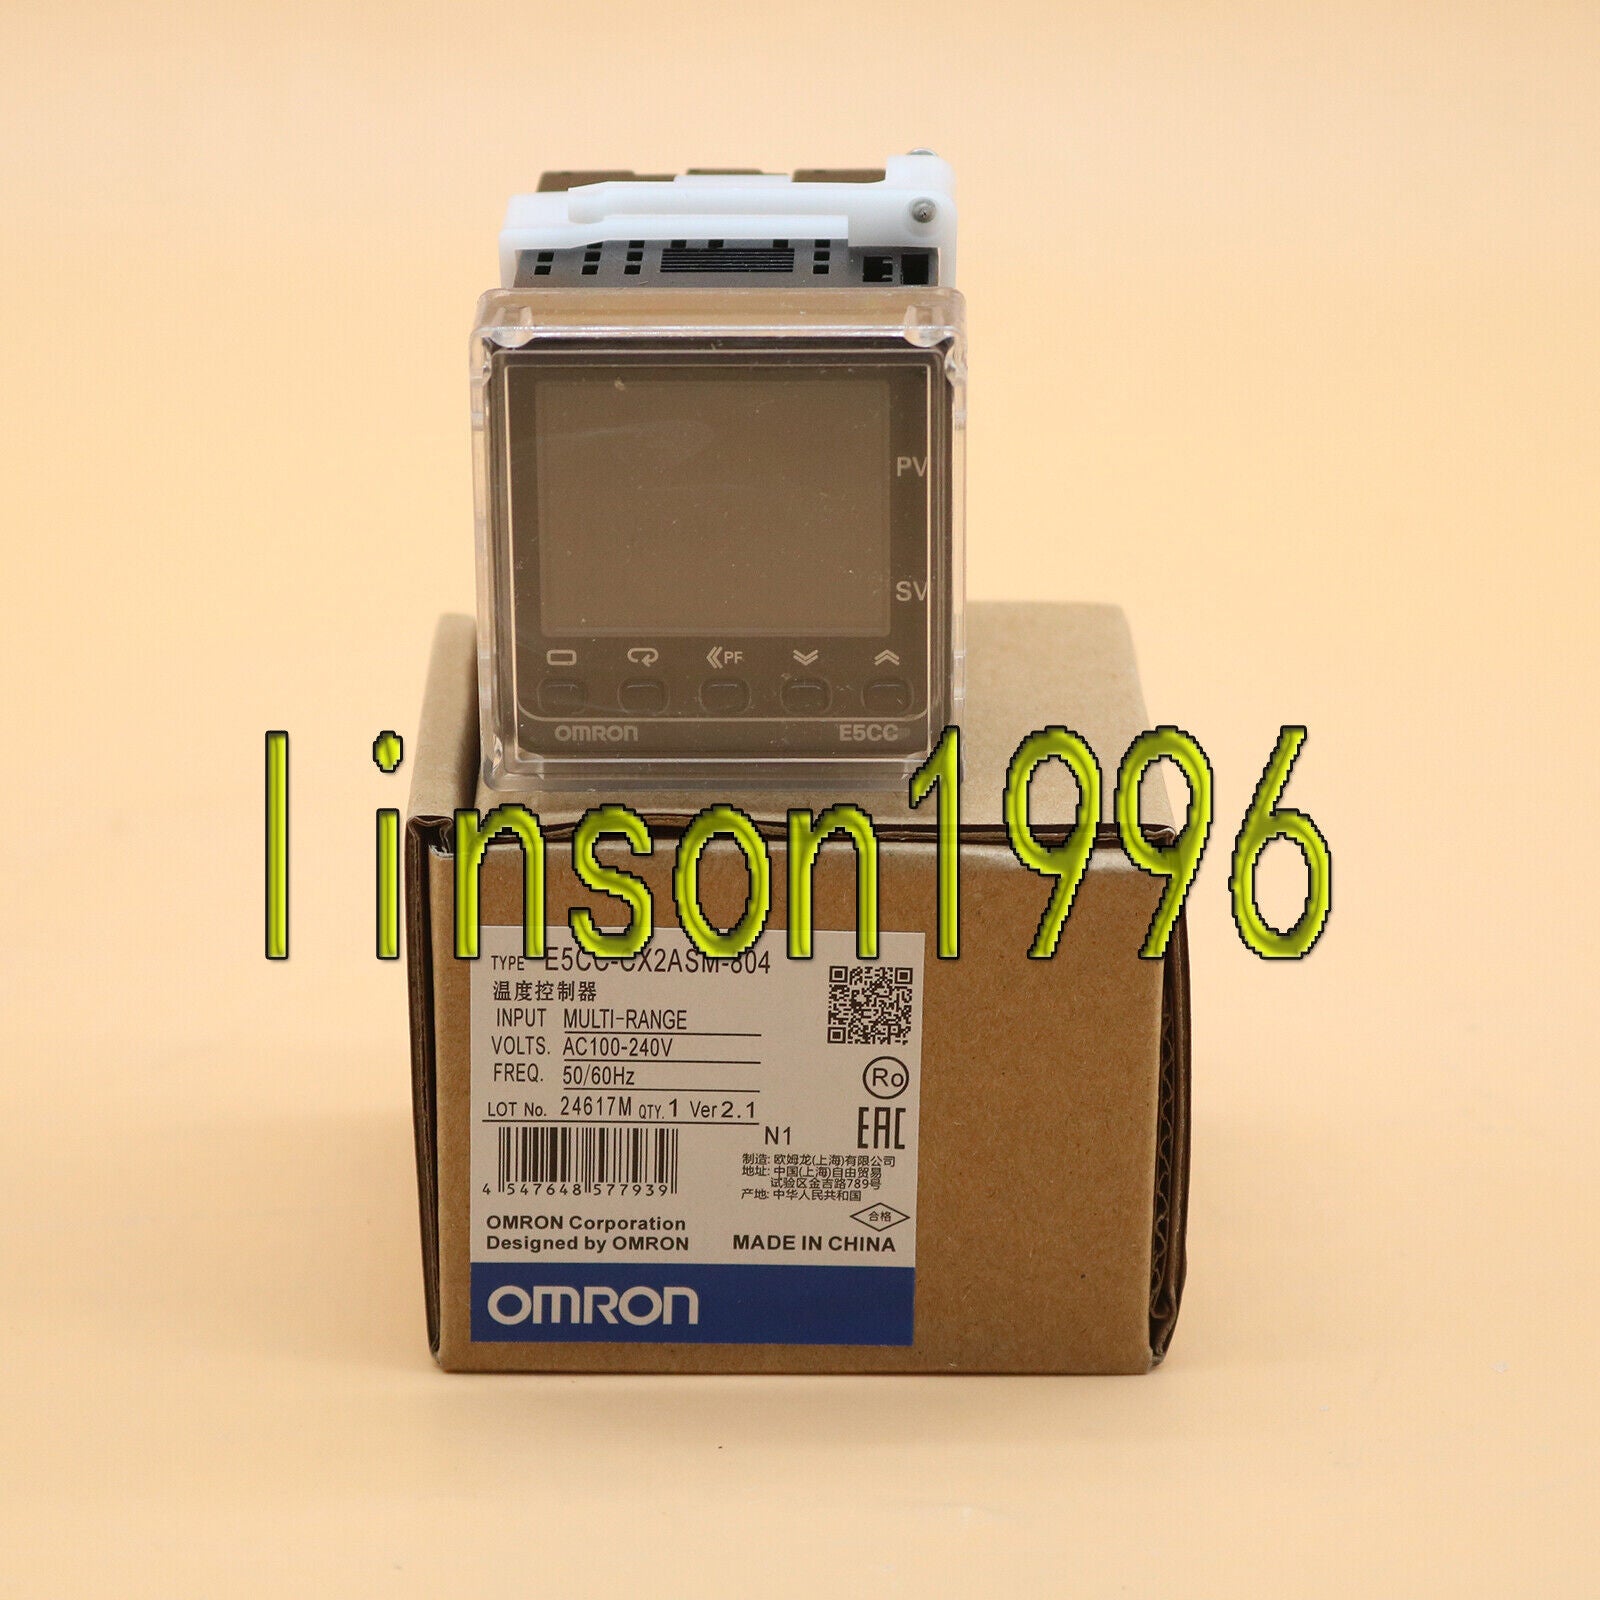 new Omron E5CC-CX2ASM-804  Temperature controller One year